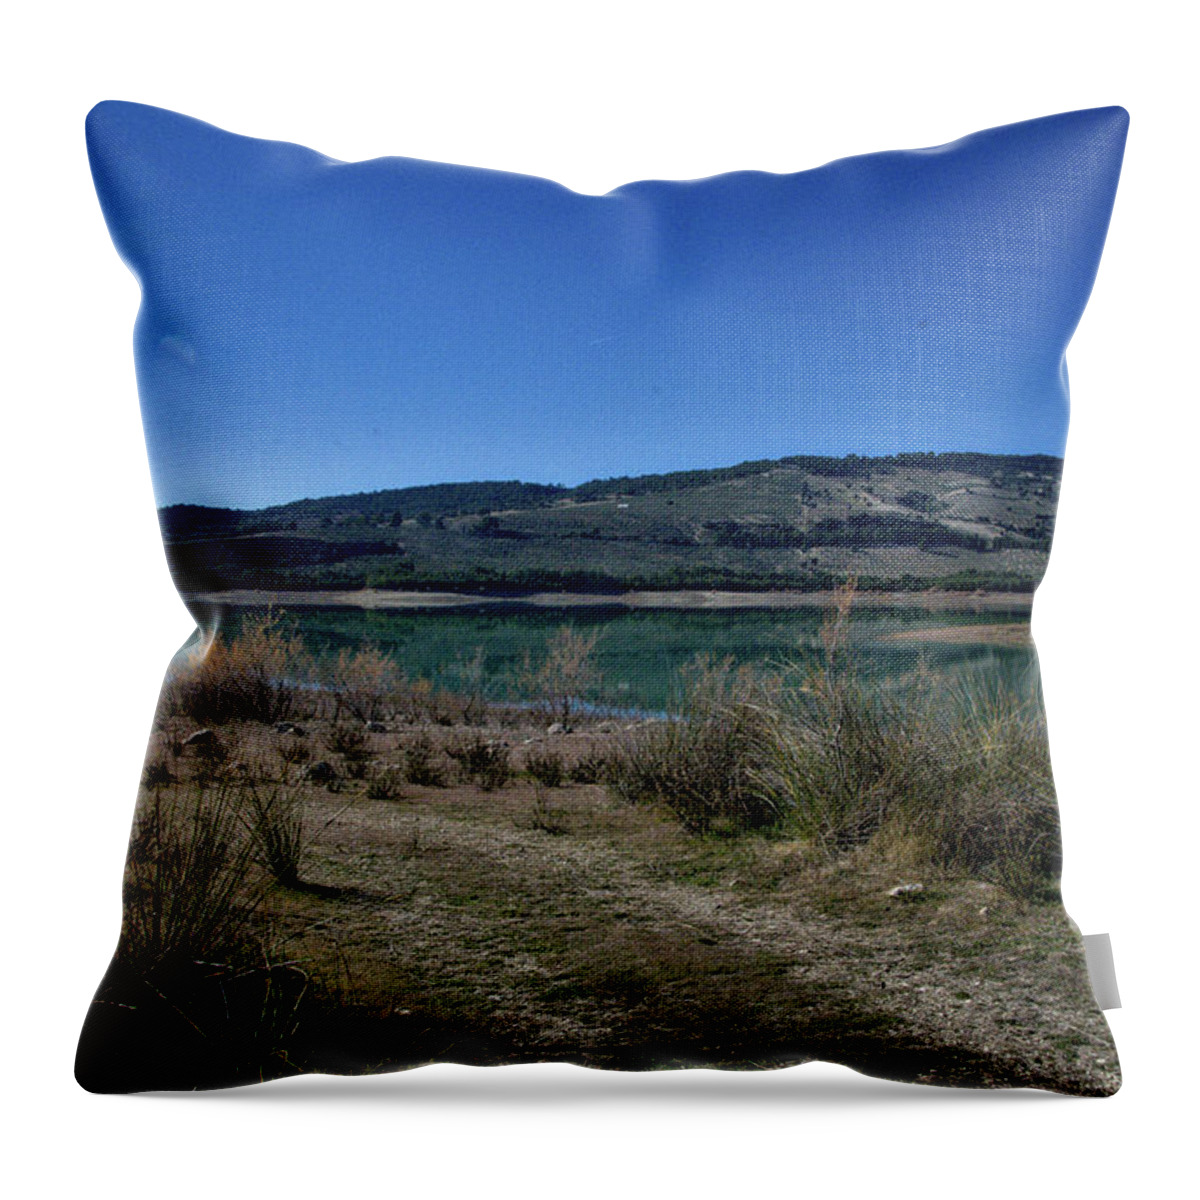 Landscape Throw Pillow featuring the photograph Bermejales2 by Ingrid Dendievel